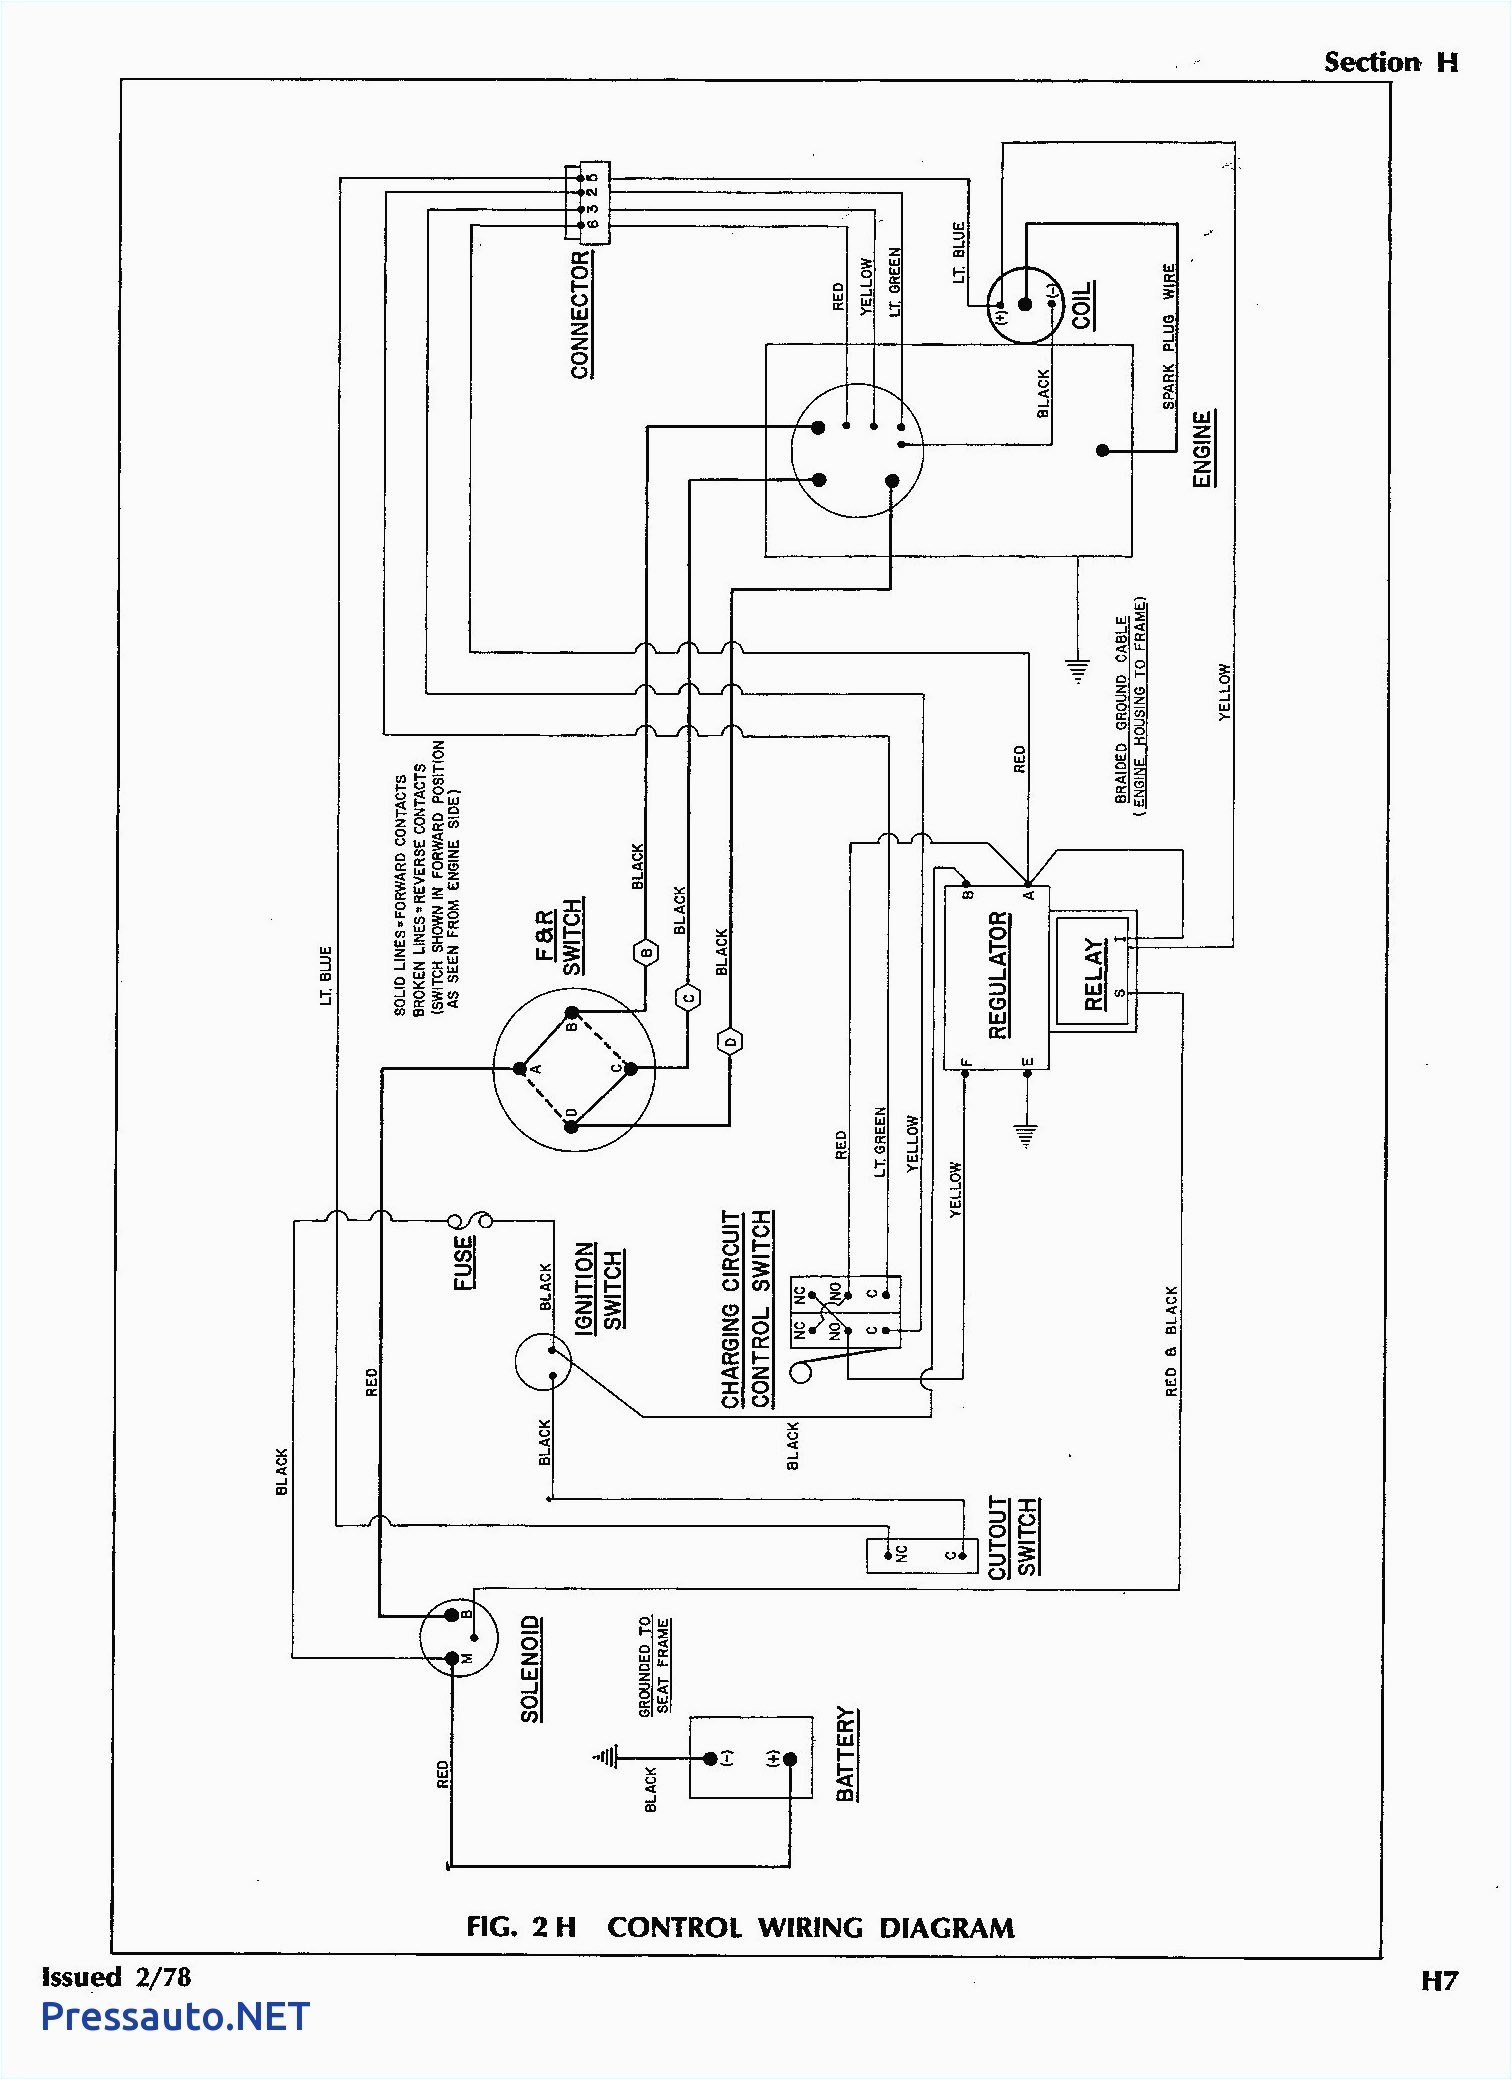 workhorse wiring diagrams wiring diagram article workhorse 350 wiring diagram wiring diagram show workhorse wiring diagram